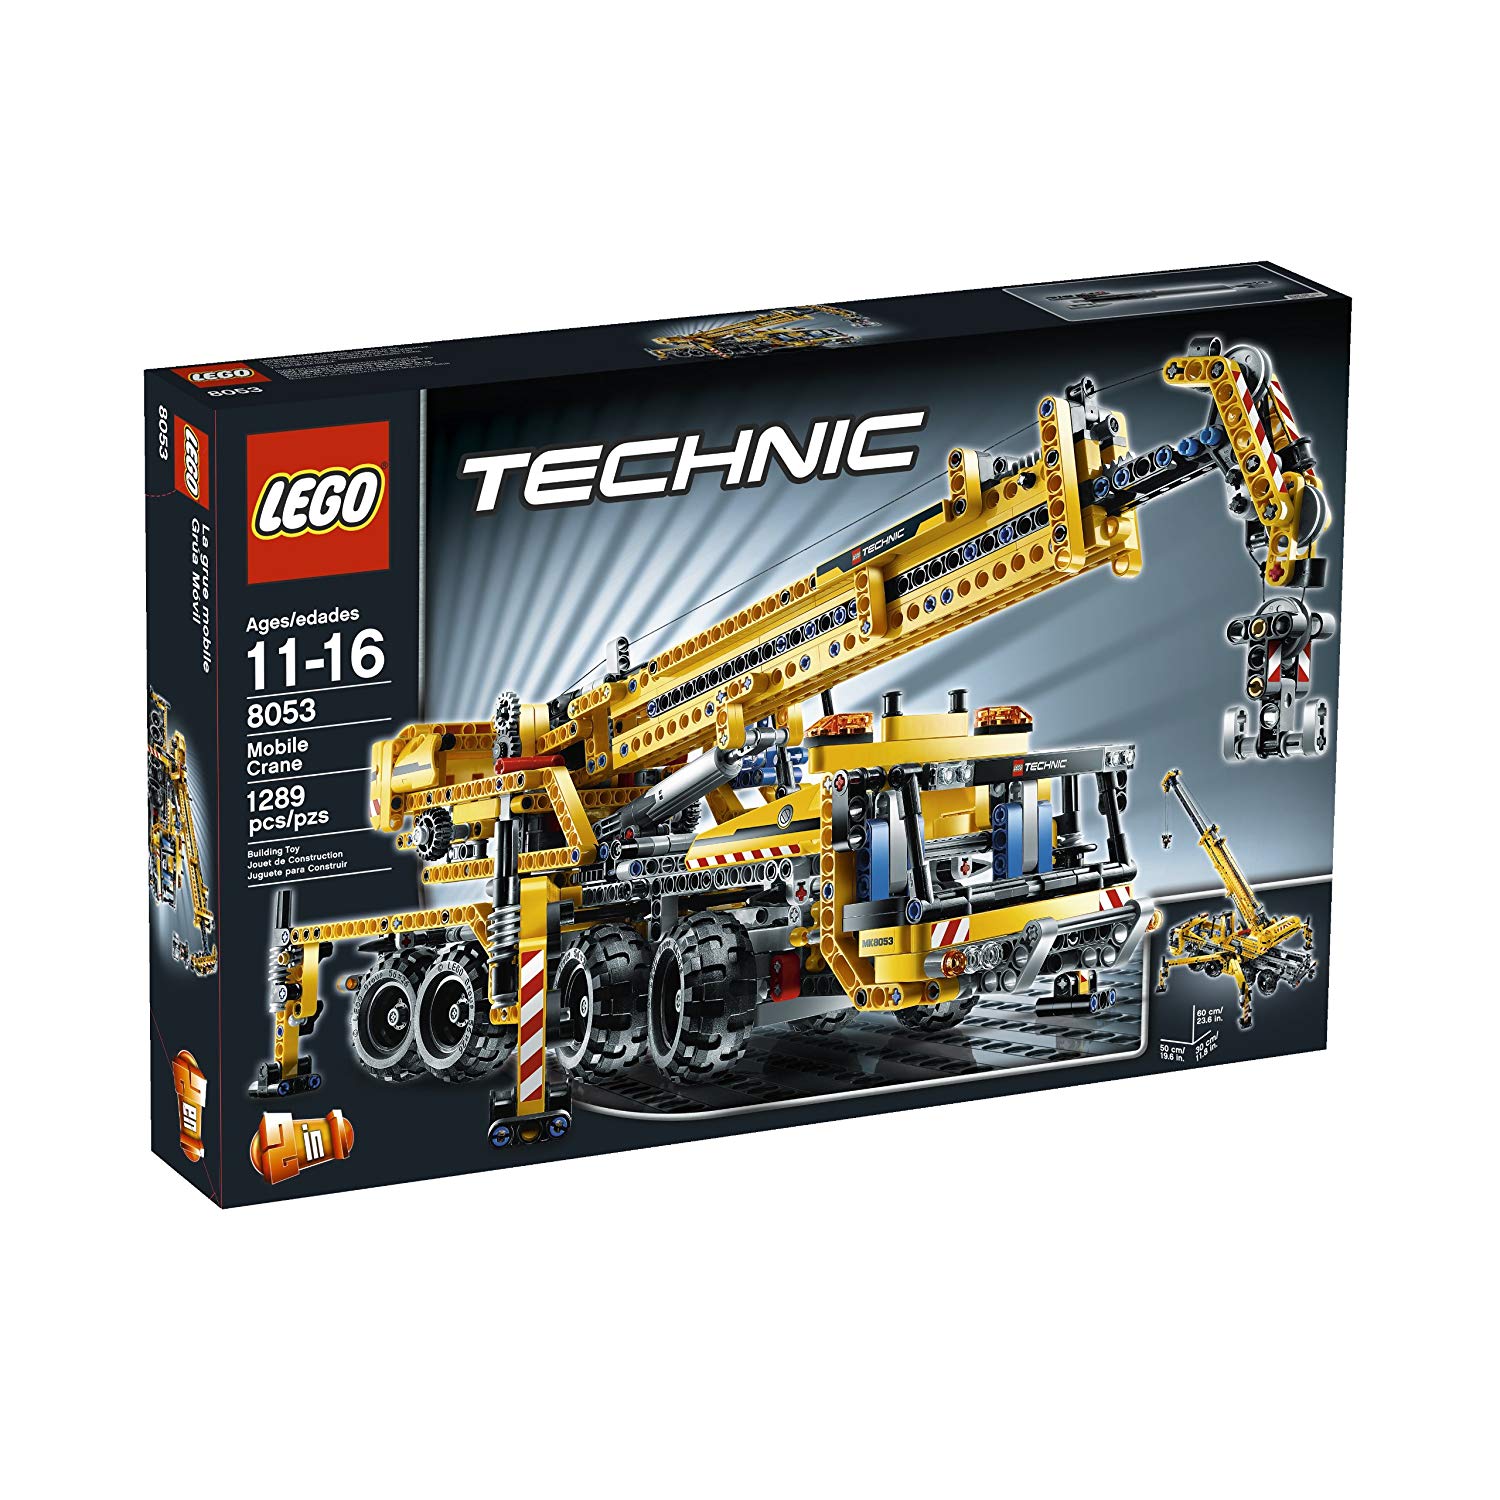 Lego Technic Mobile Crane (8053)